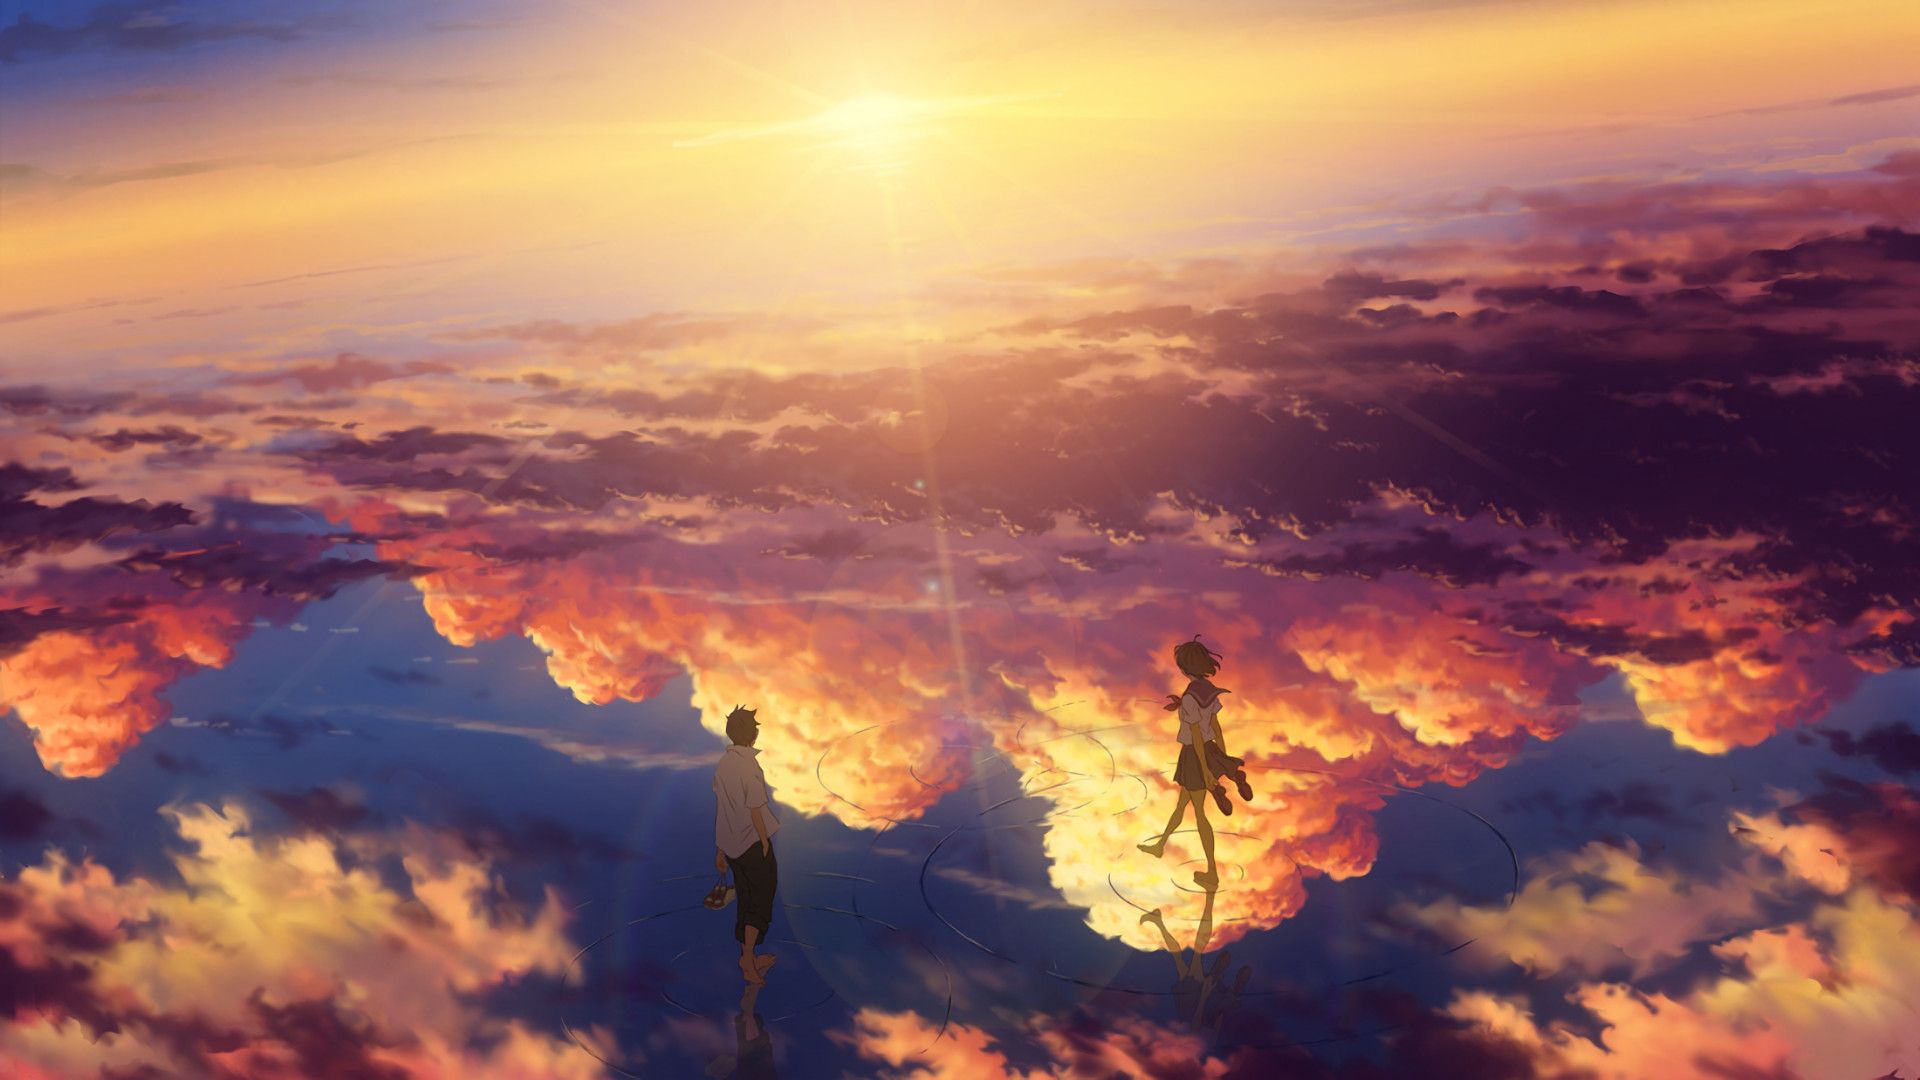 Anime Landscape Wallpaper